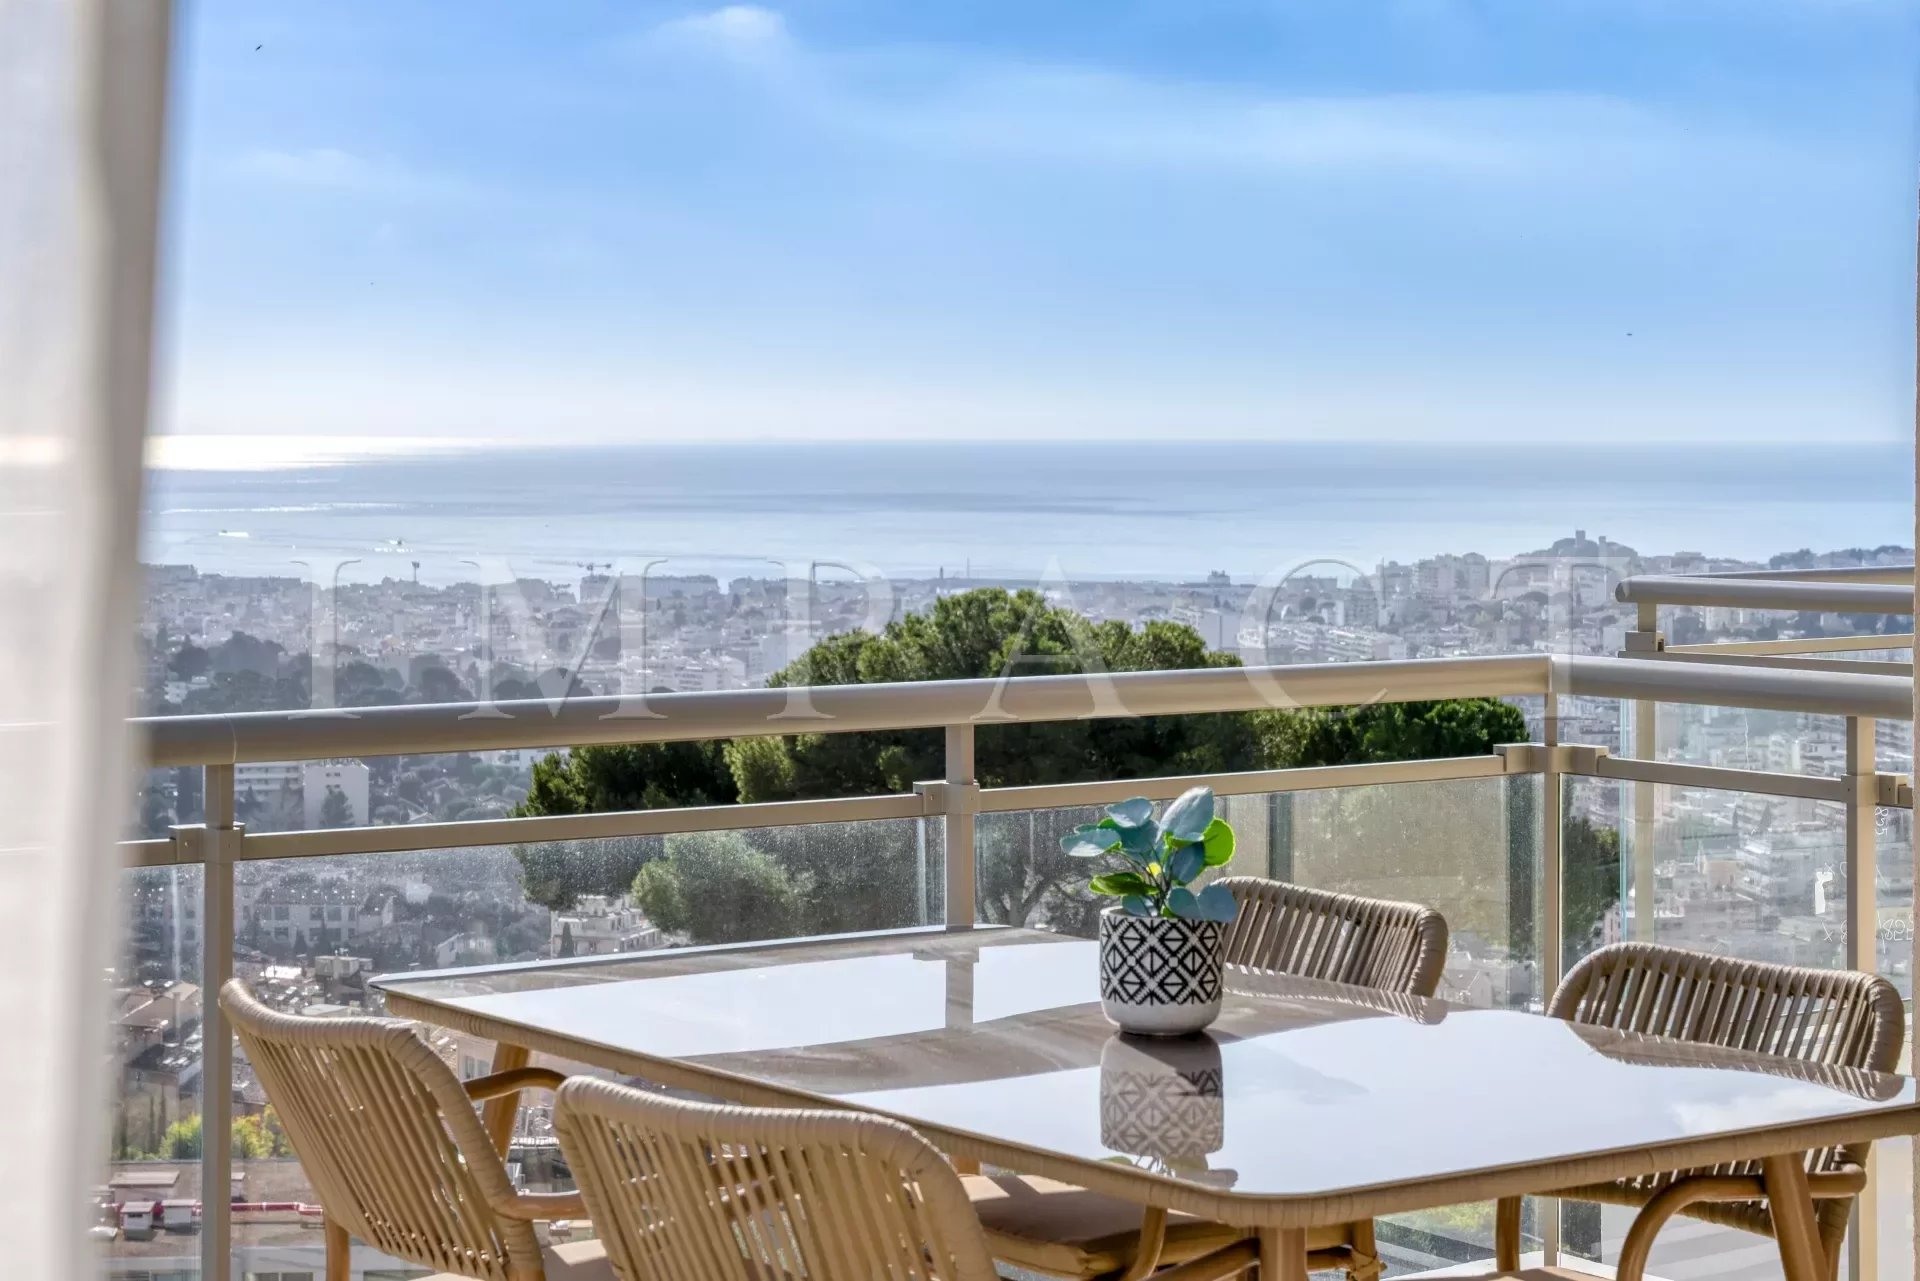 Le Cannet sea view apartment for sale 